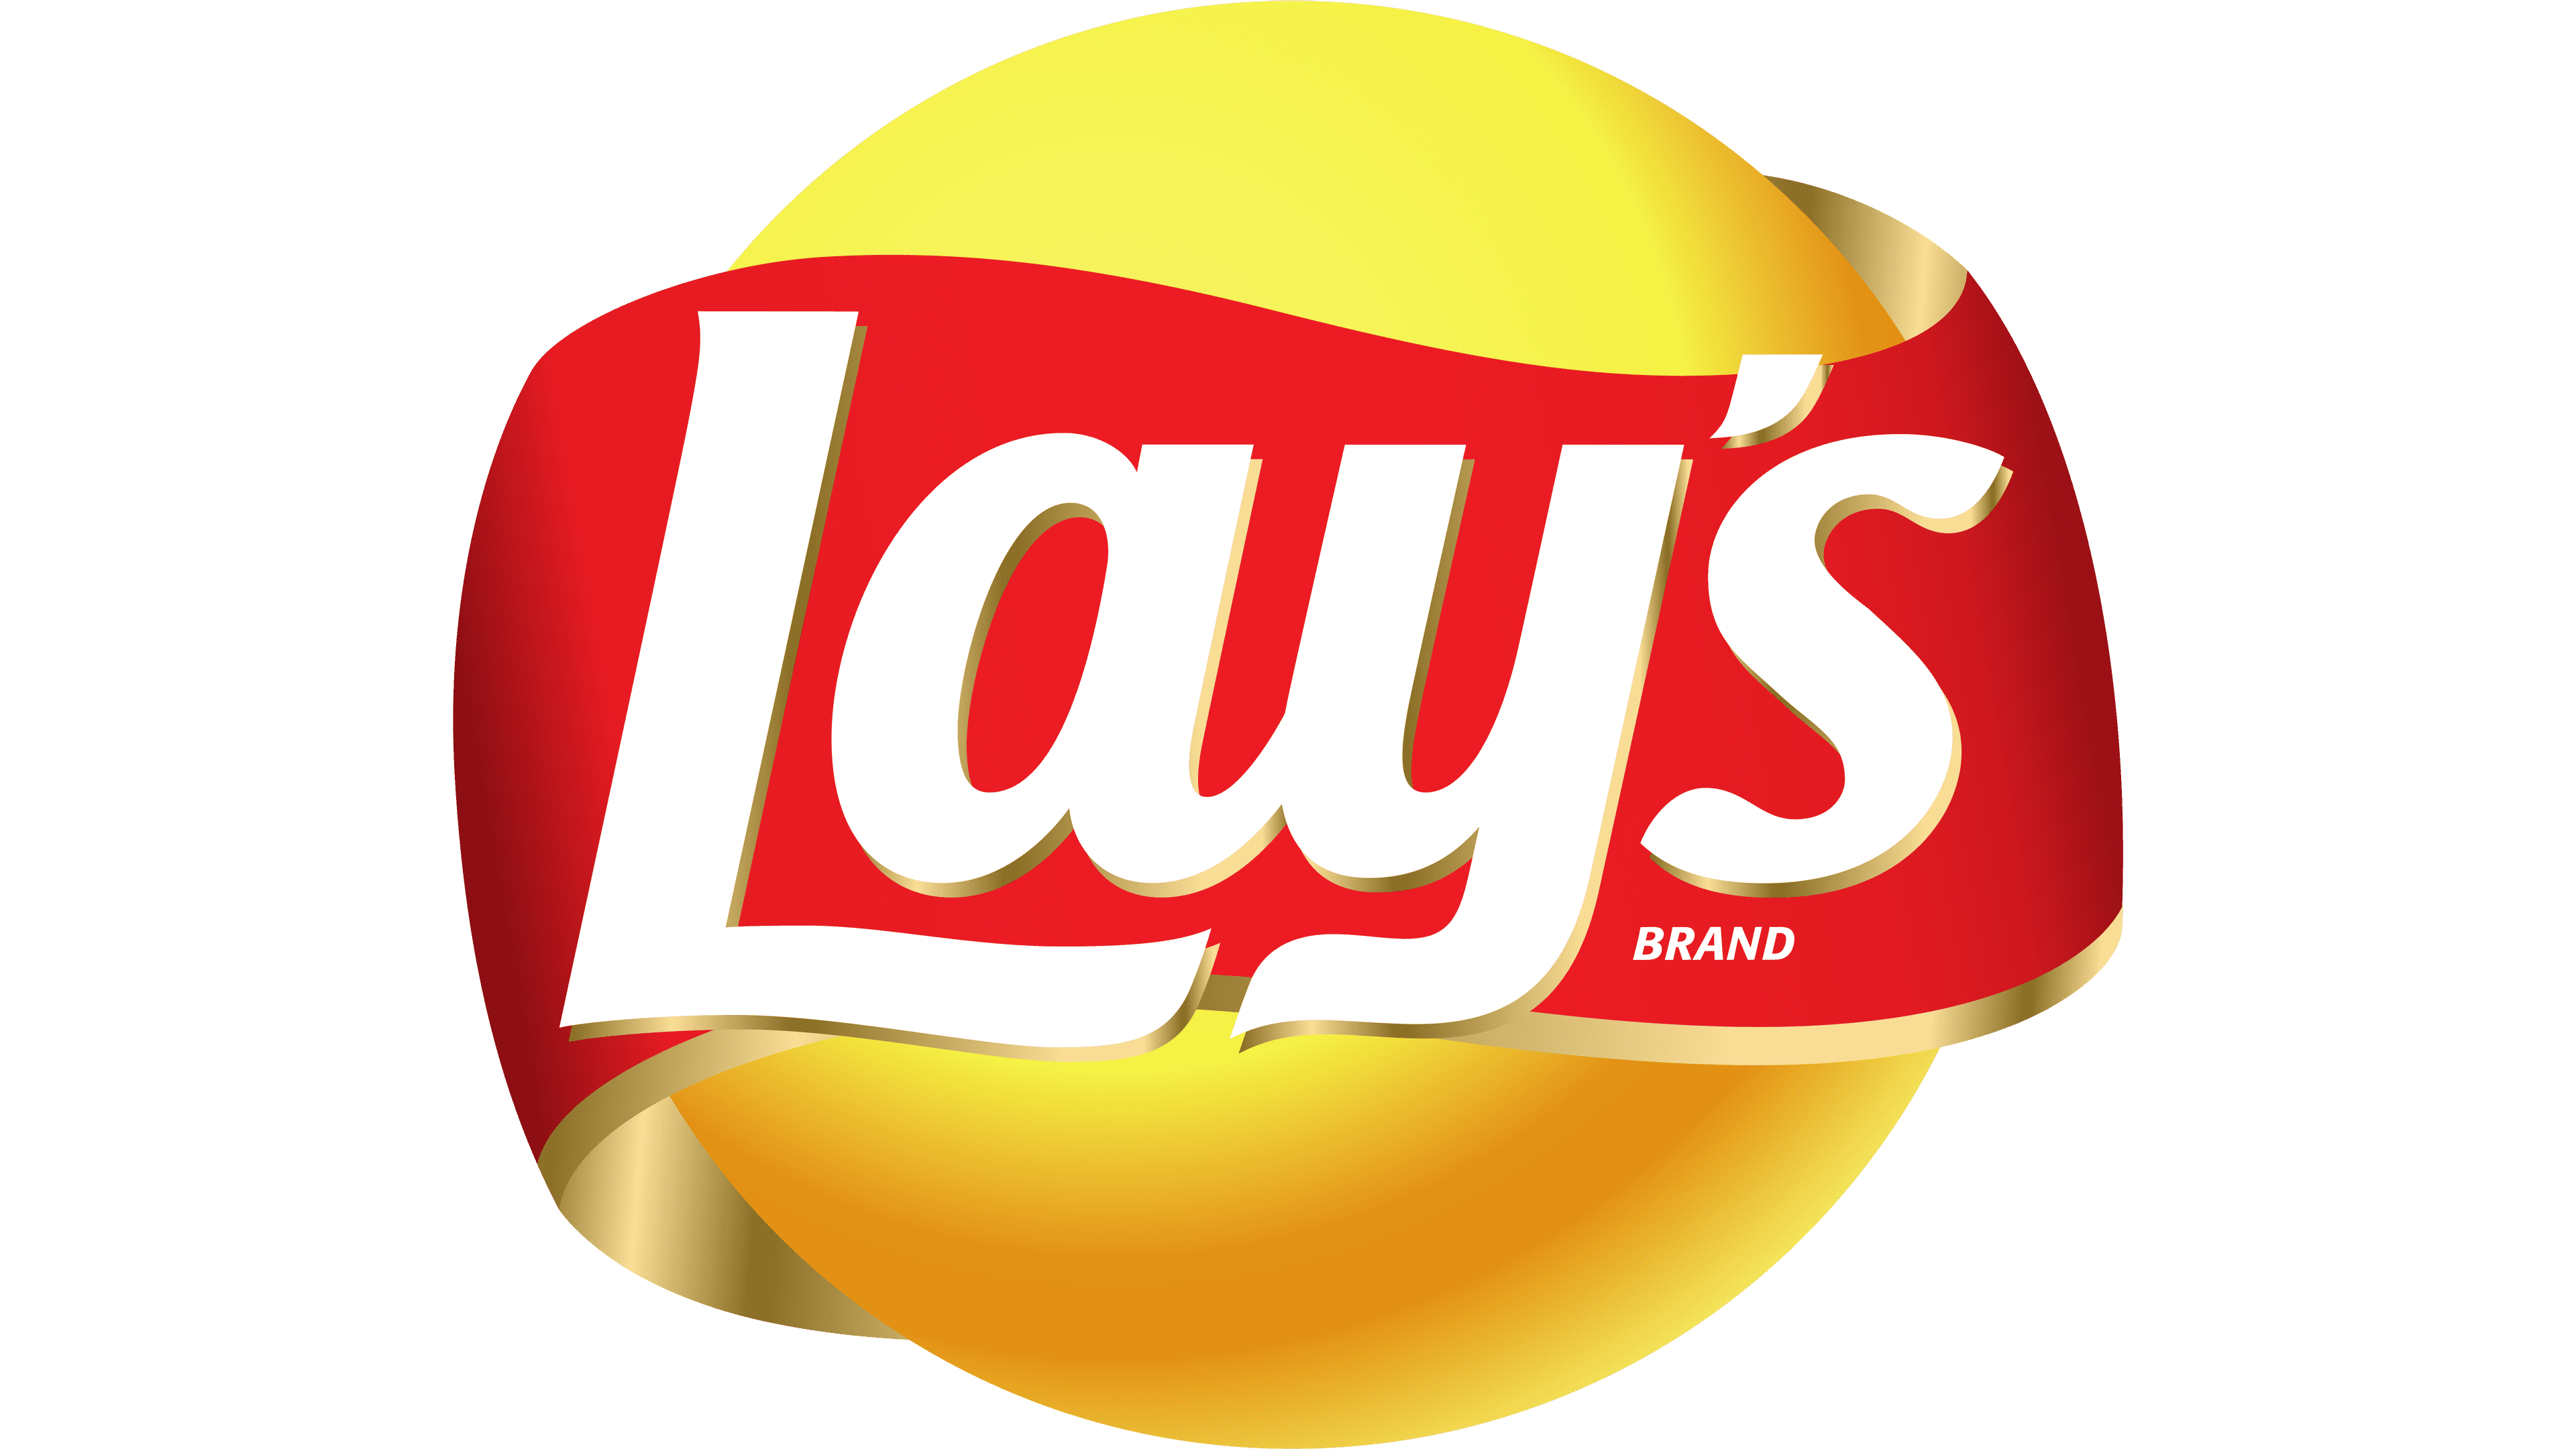 Lays Logo PNG File